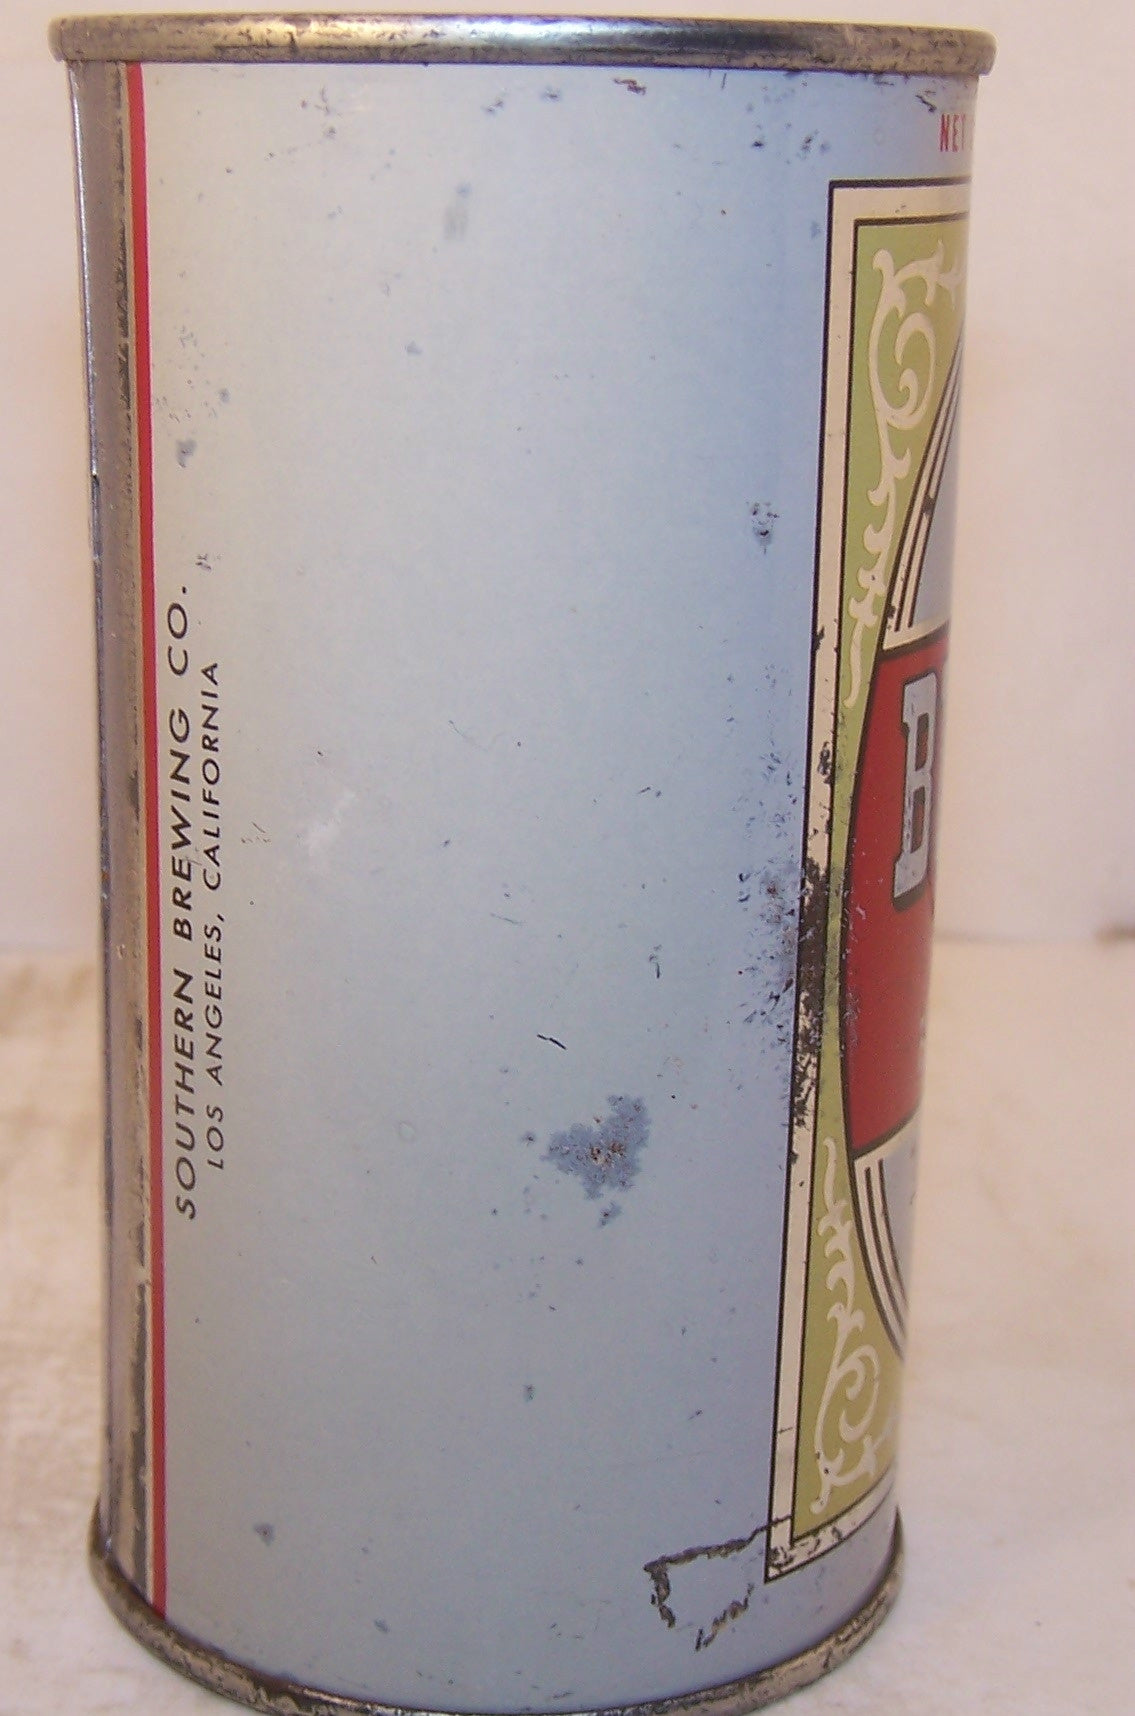 Buffalo Brand Extra Pale Beer, USBC 45-5, Grade 1/1-